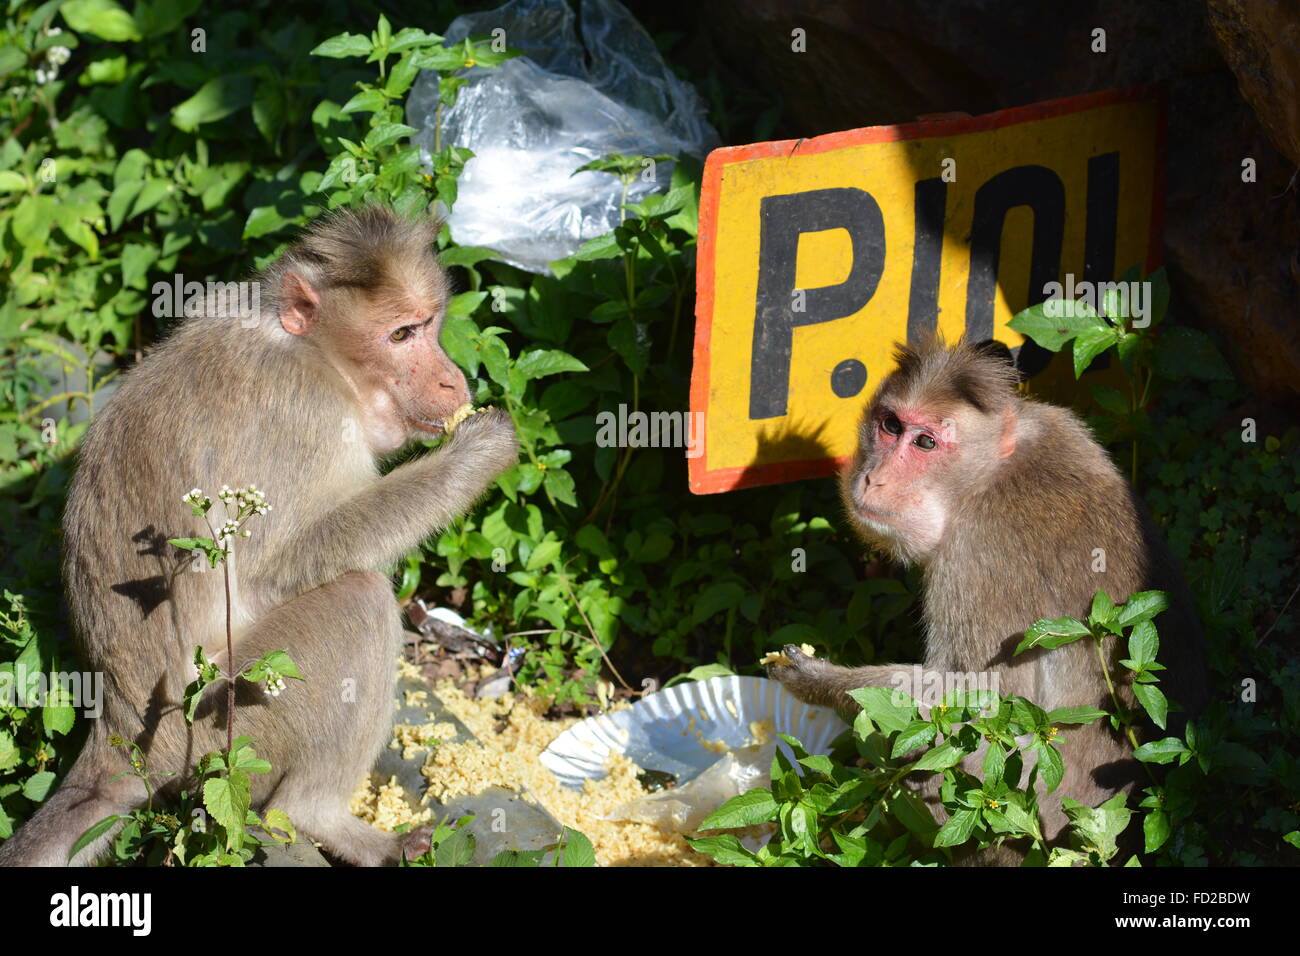 Nilgri montagne, India - 29 Ottobre 2015 - Due monkey mangiare i rifiuti nei pressi di binari ferroviari Nilgri montagne, India Foto Stock